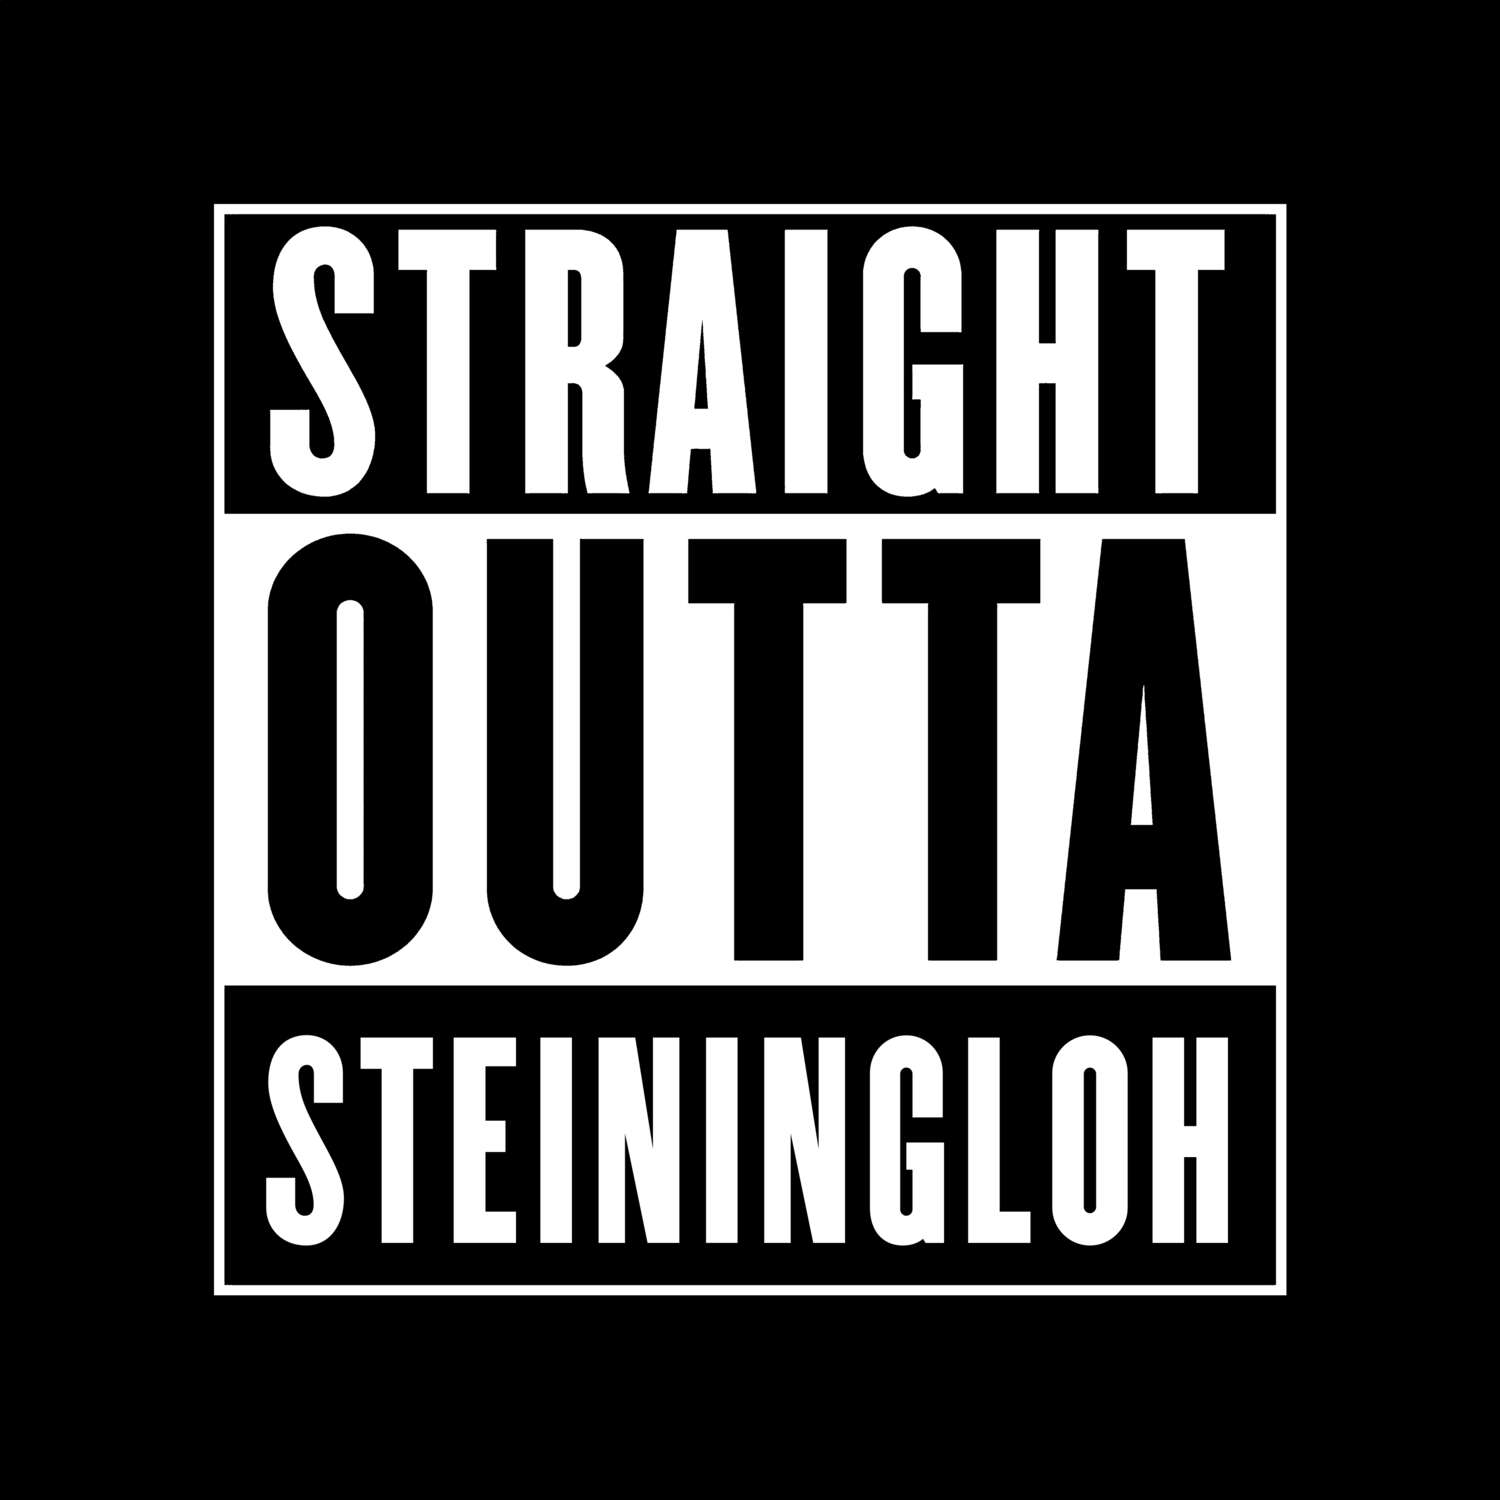 Steiningloh T-Shirt »Straight Outta«